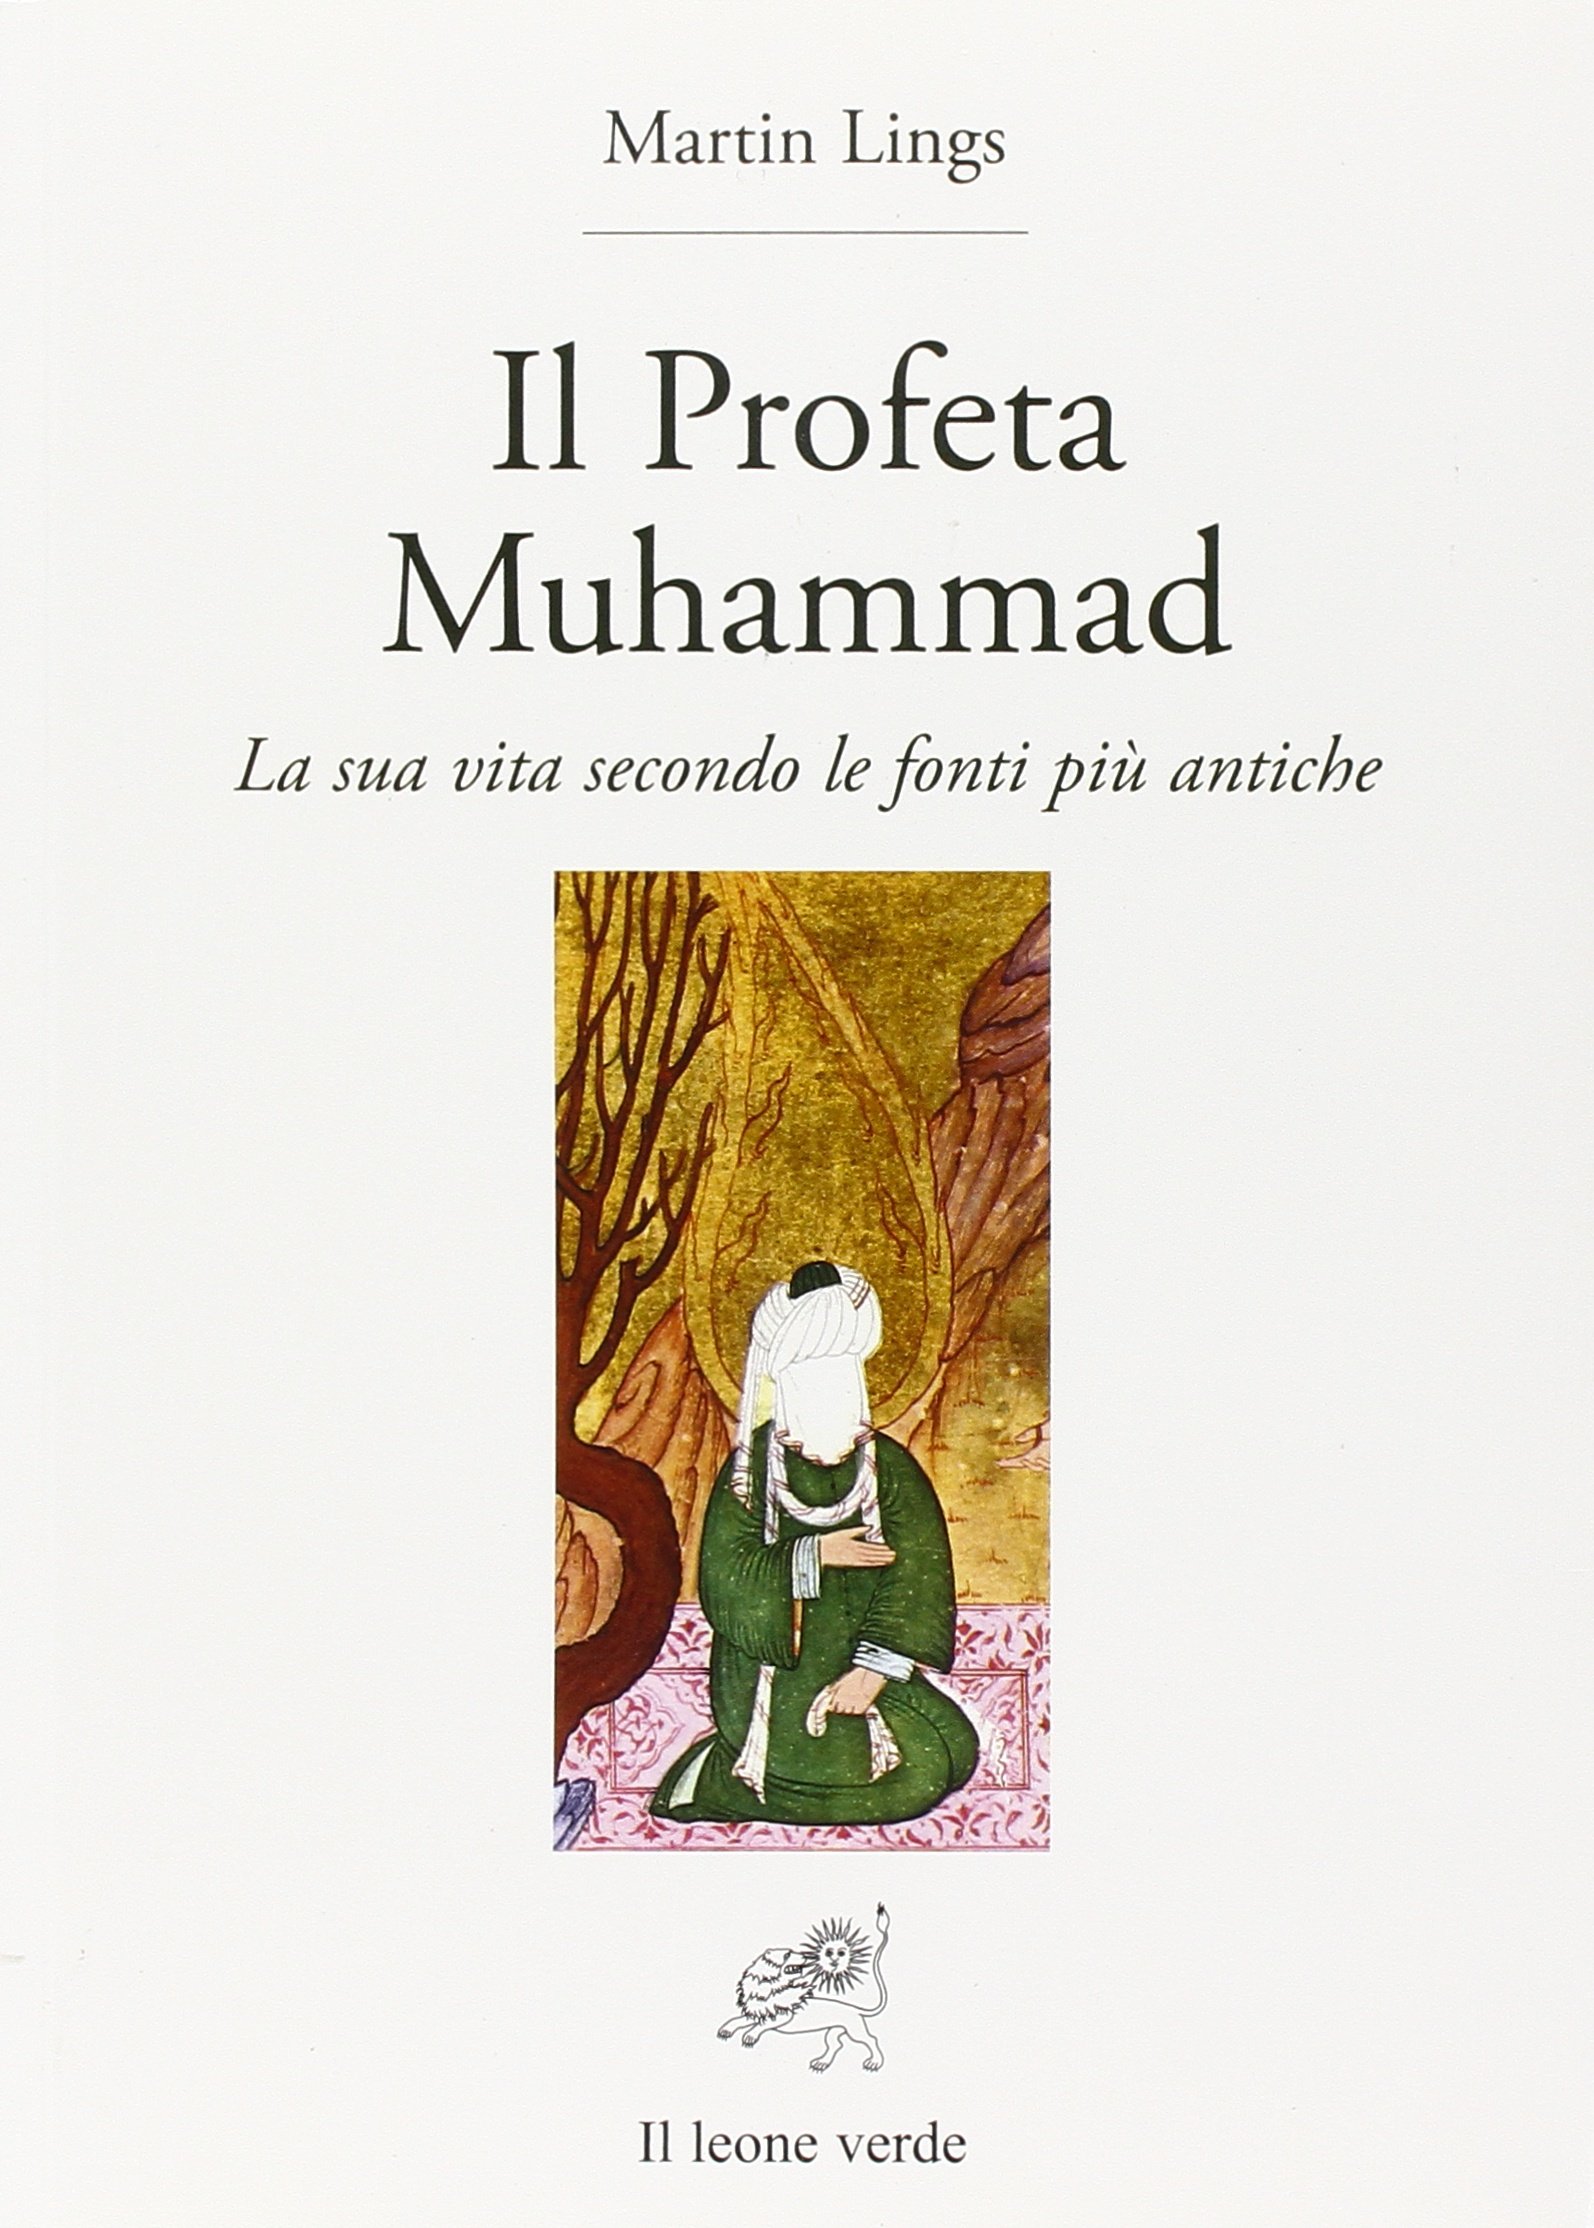 Il profeta Muhammad la vita